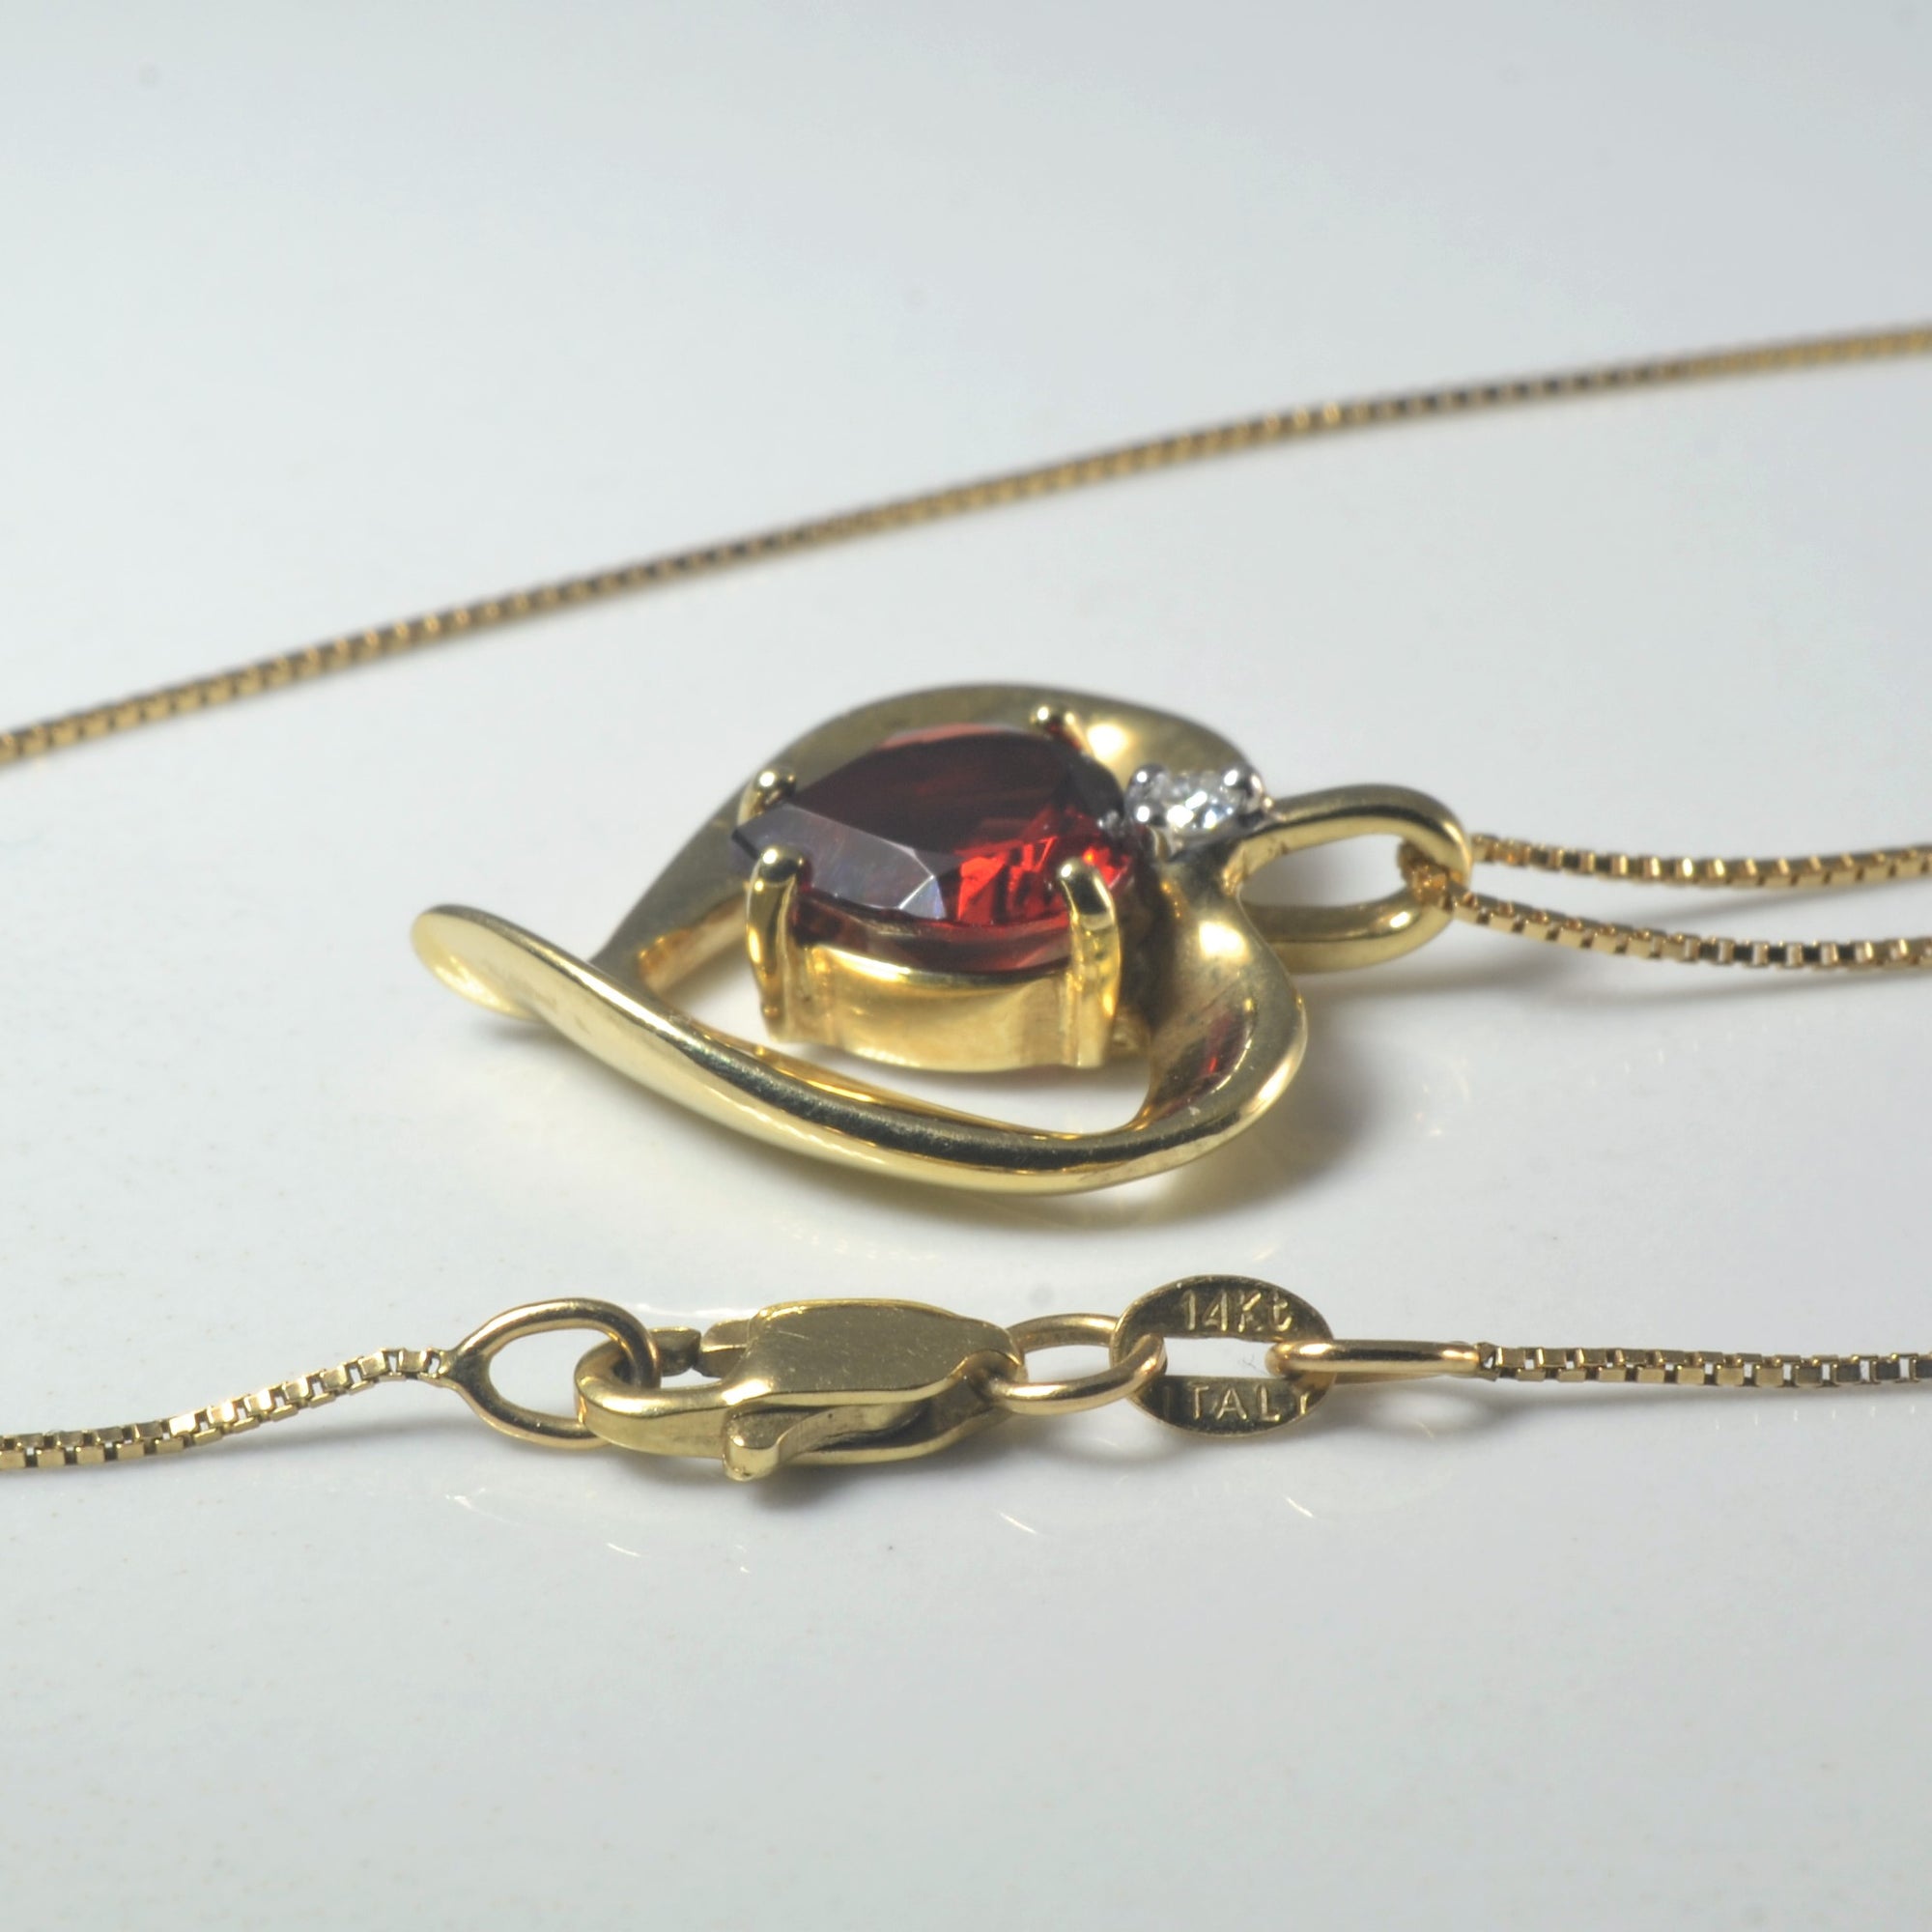 Garnet & Diamond Heart Necklace | 1.30ct, 0.02ct | 18